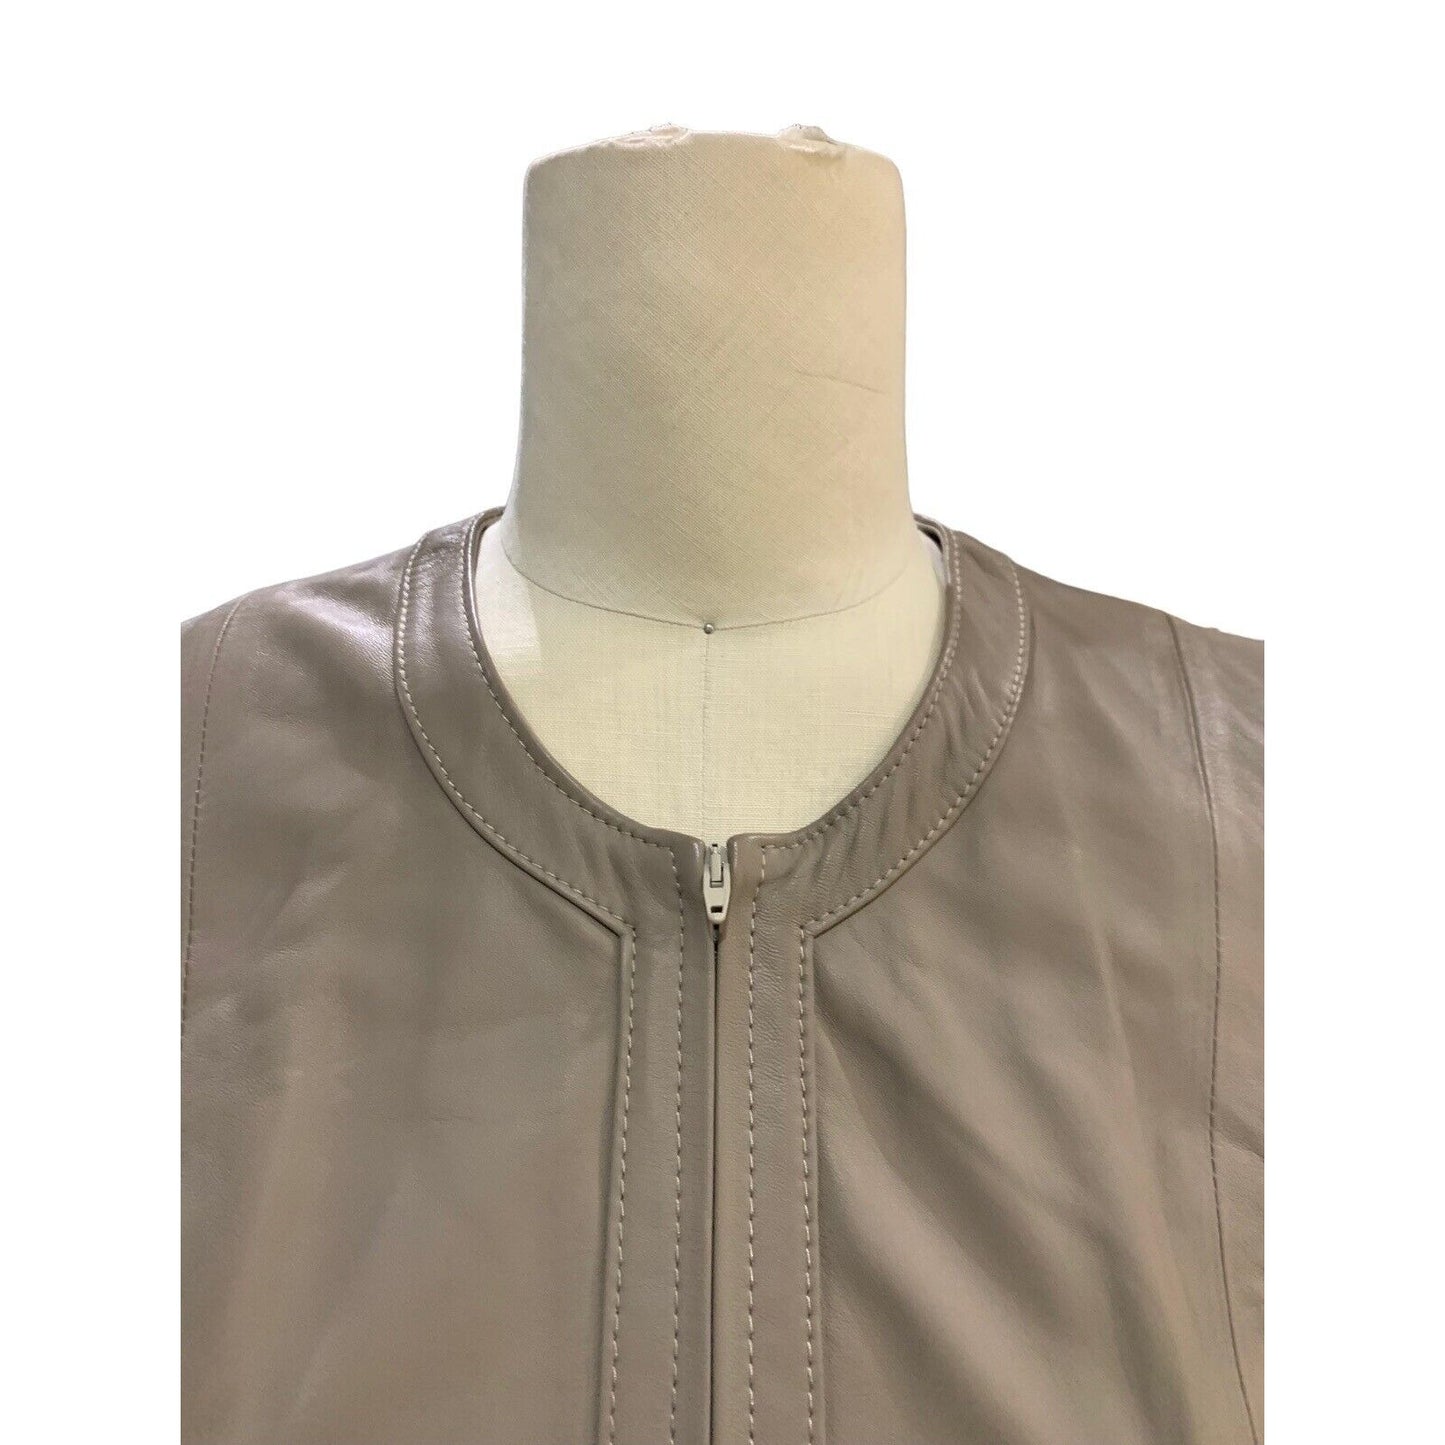 Canipelle Women’s Nappa Leather Shirt Jacket